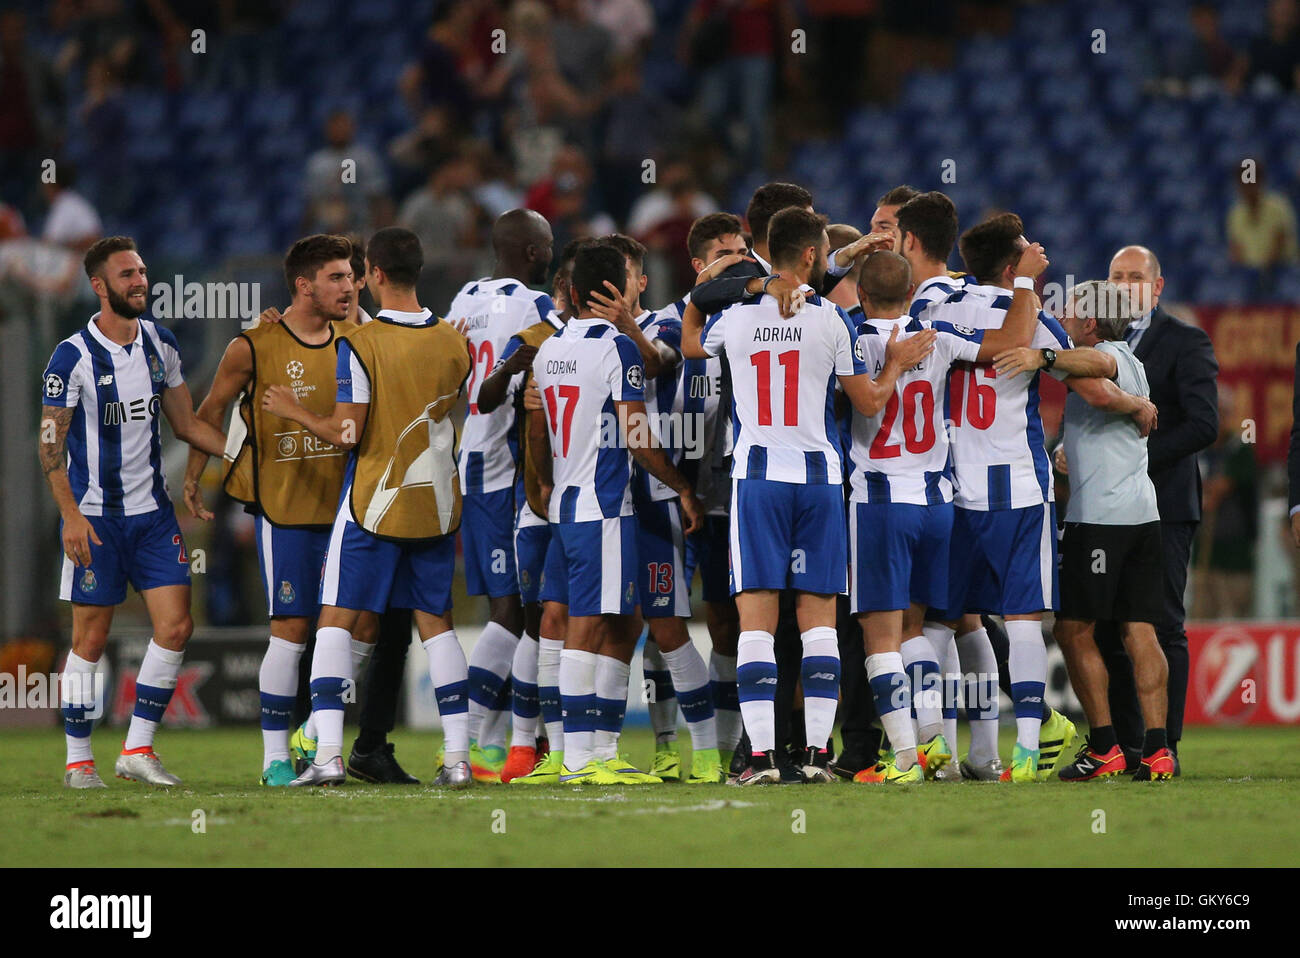 FC Porto - ⏱Final de Jogo / End of the match / Final del